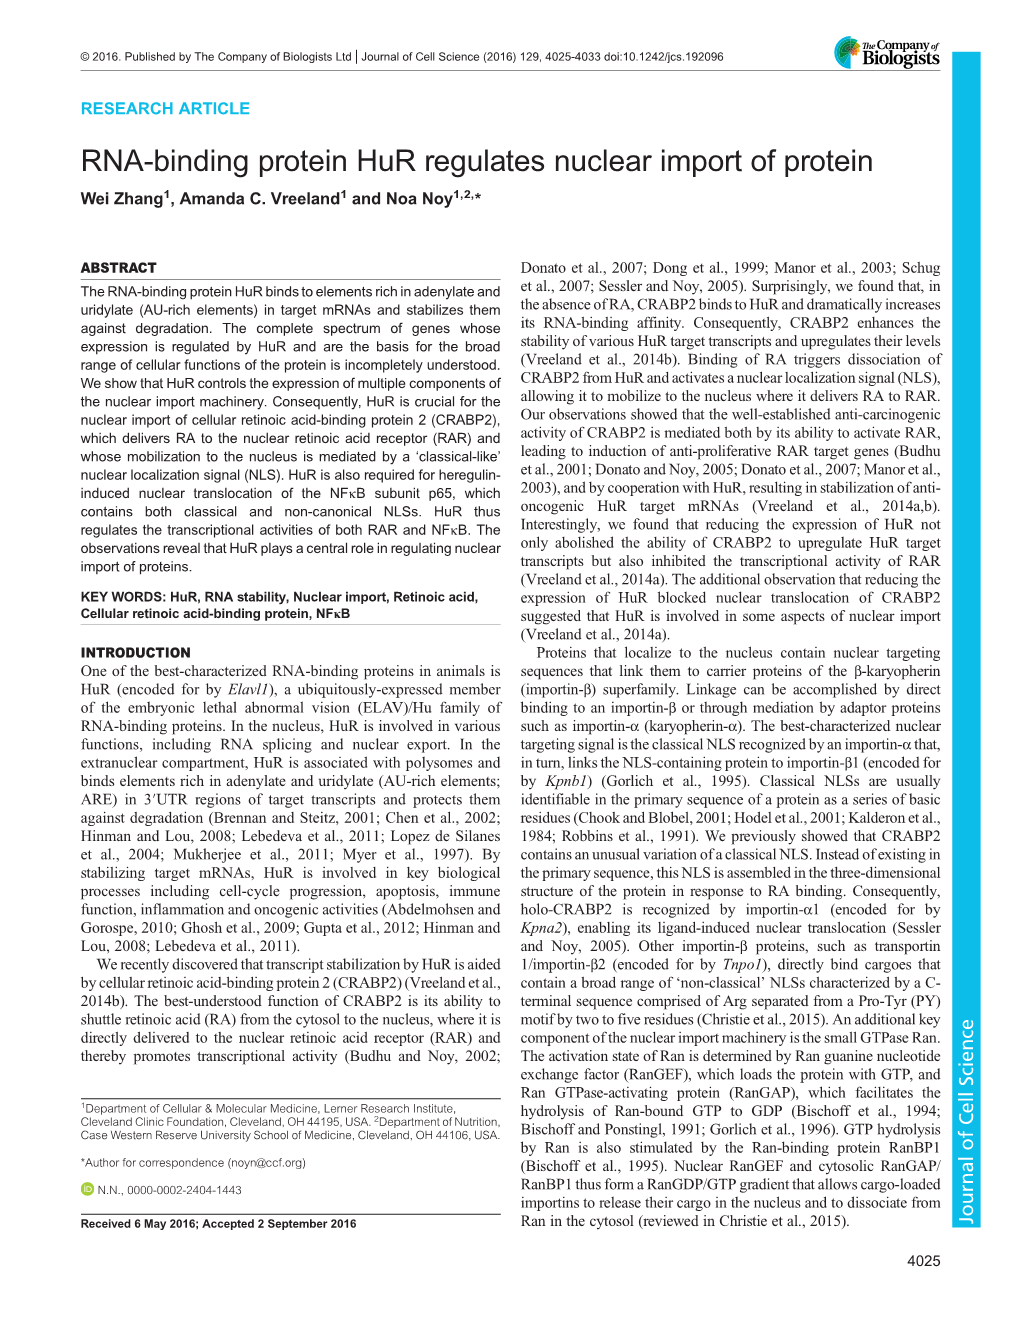 RNA-Binding Protein Hur Regulates Nuclear Import of Protein Wei Zhang1, Amanda C